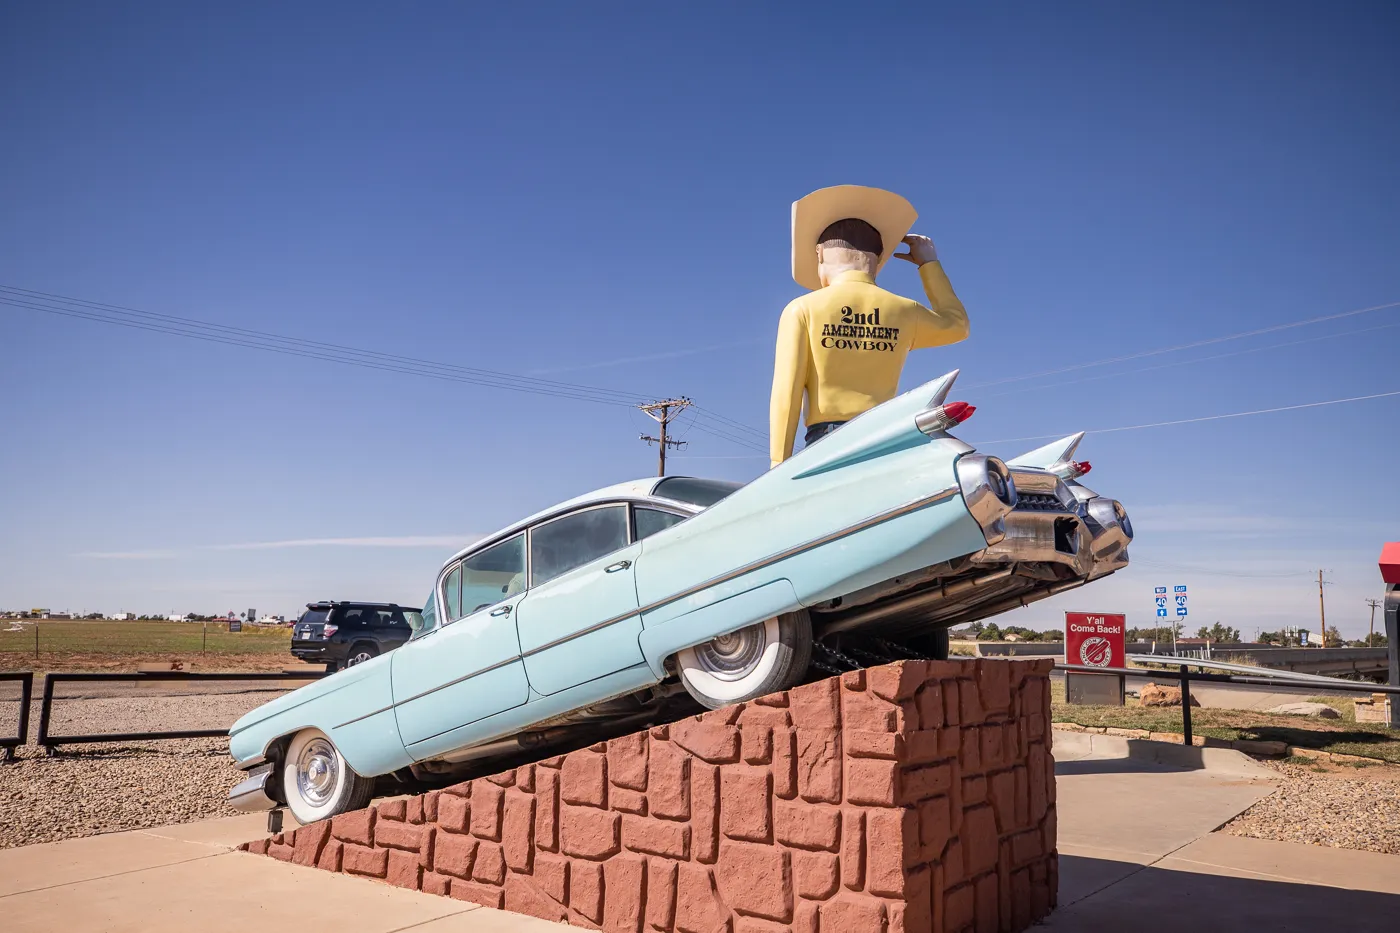 2nd Amendment Cowboy Muffler Man in Amarillo, Texas Route 66 roadside attraction